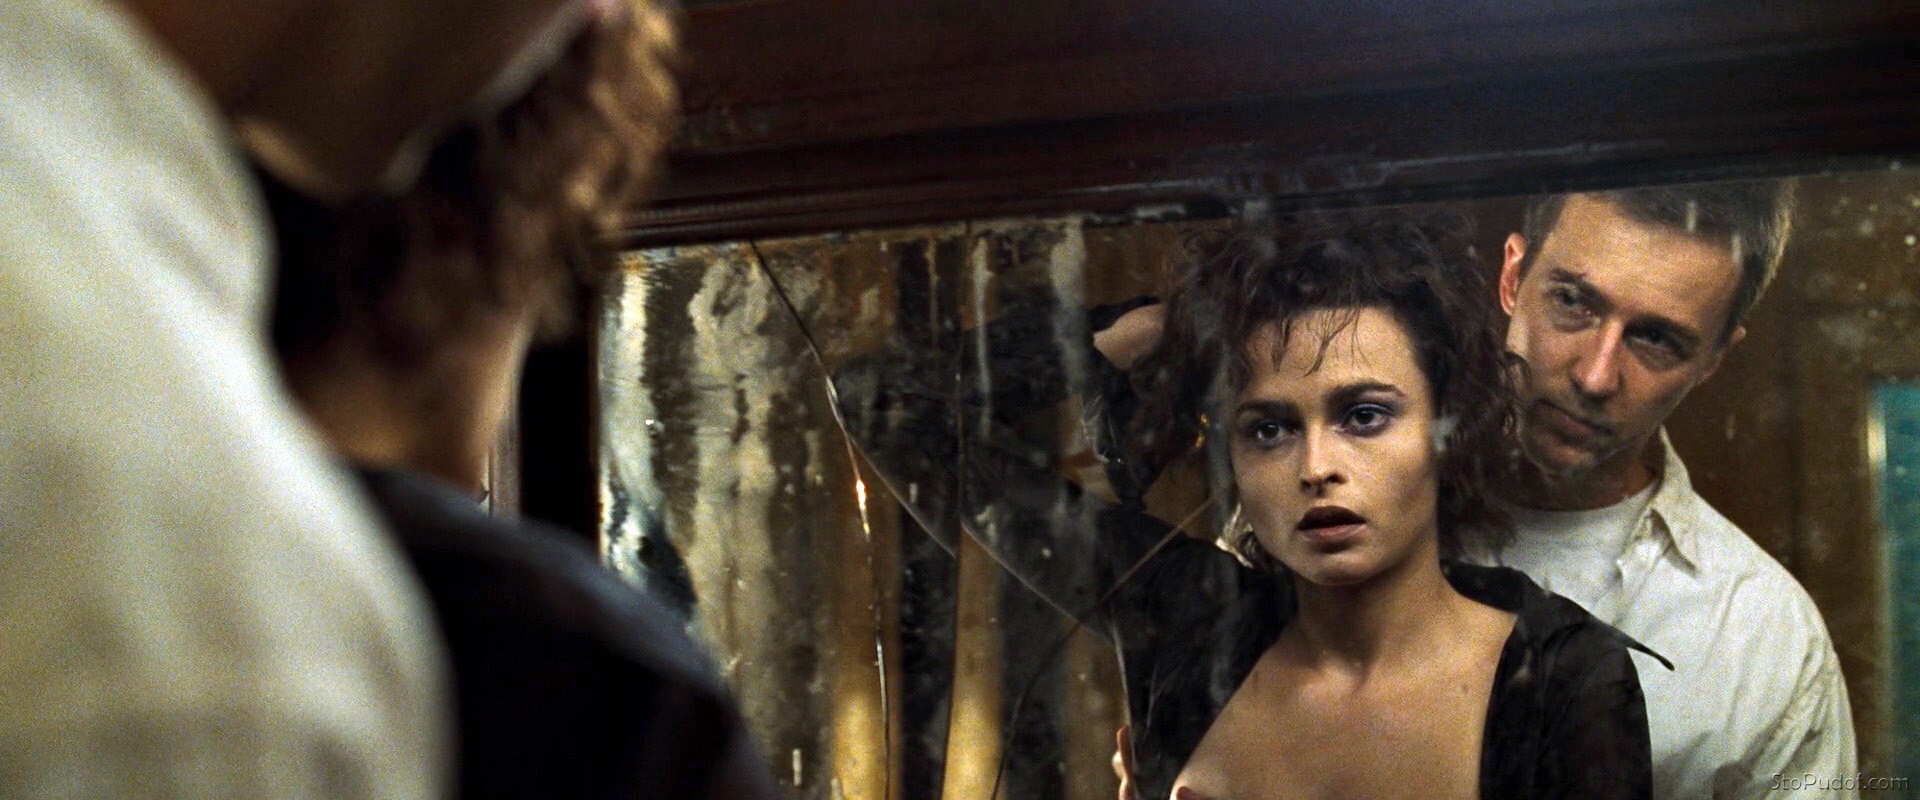 leaked nude photos Helena Bonham Carter uncensored - UkPhotoSafari